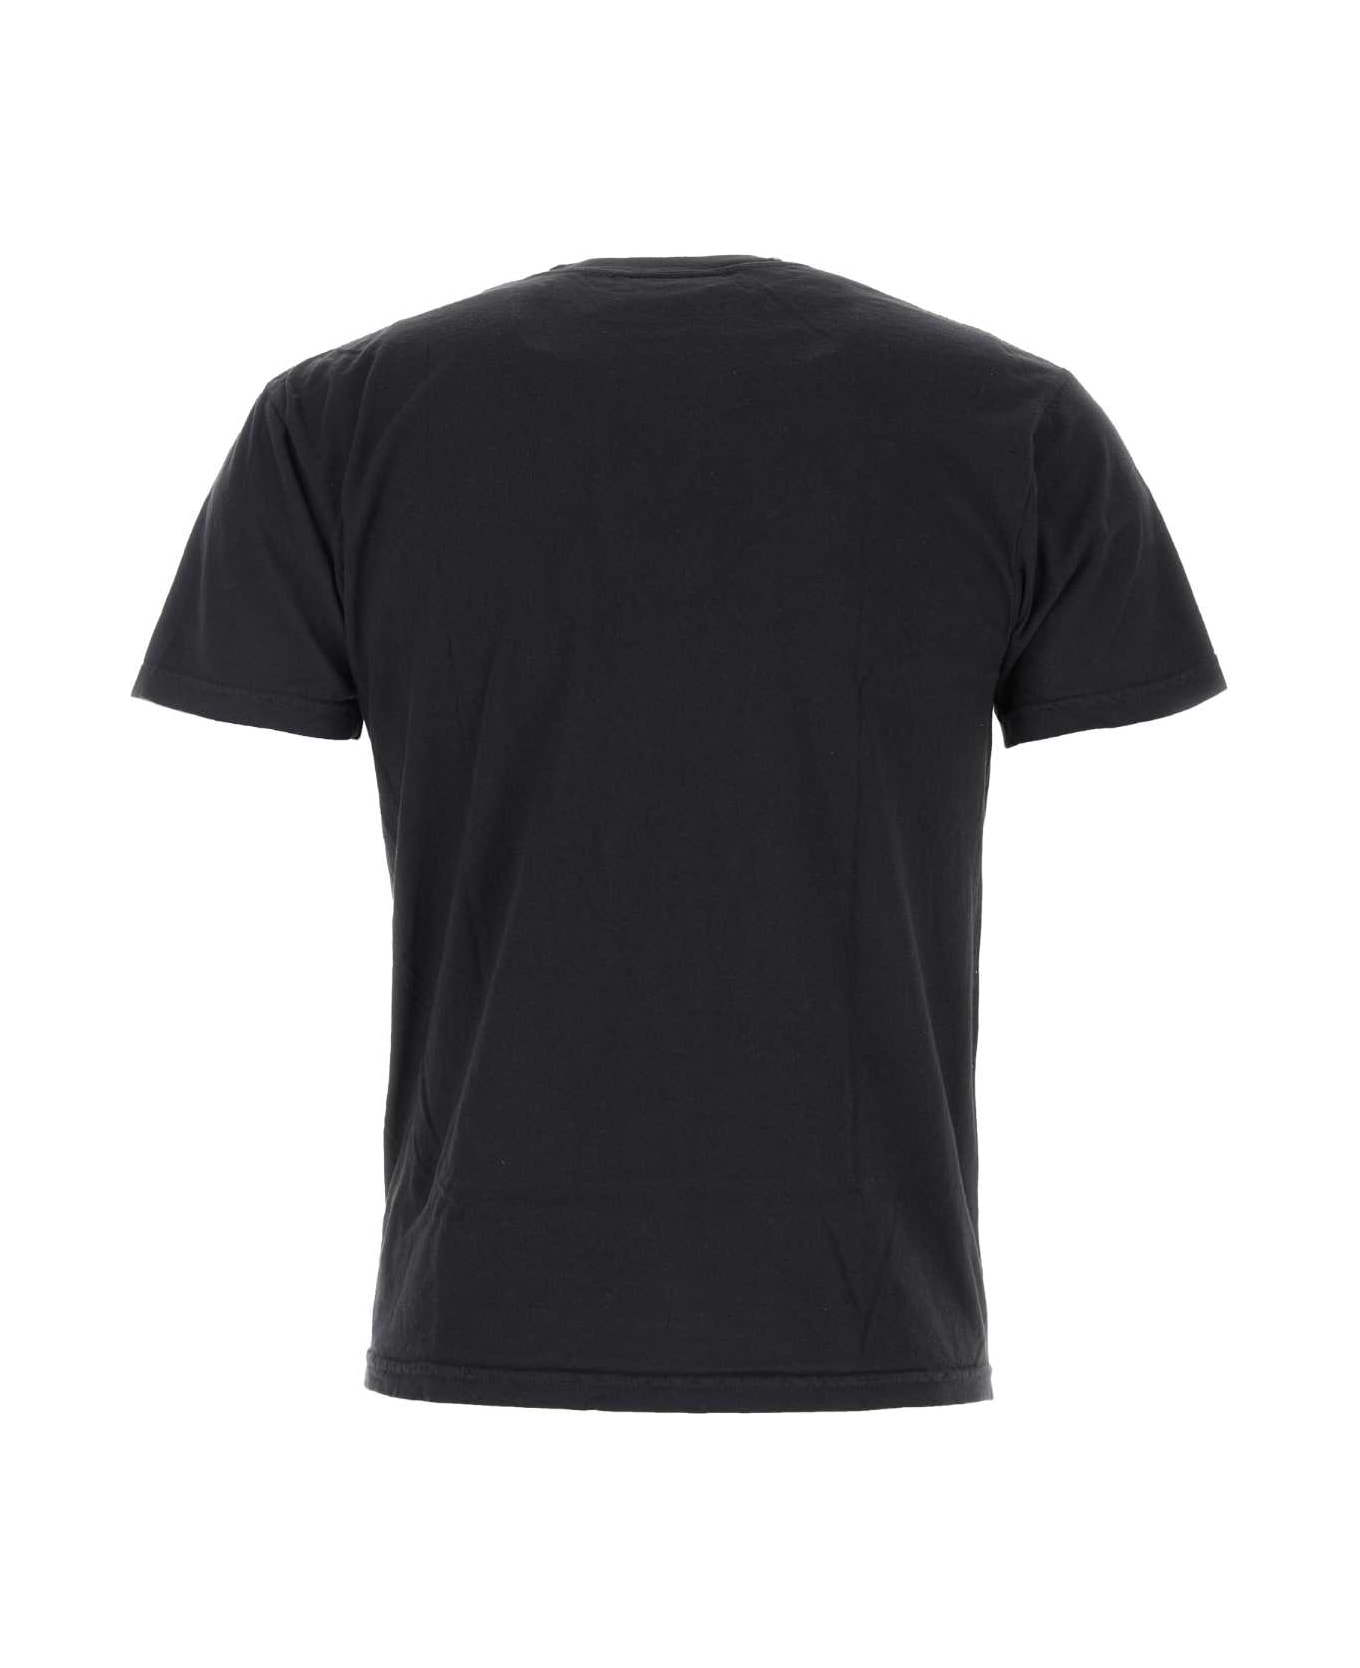 Kidsuper Black Cotton T-shirt - JAZZCLUB シャツ